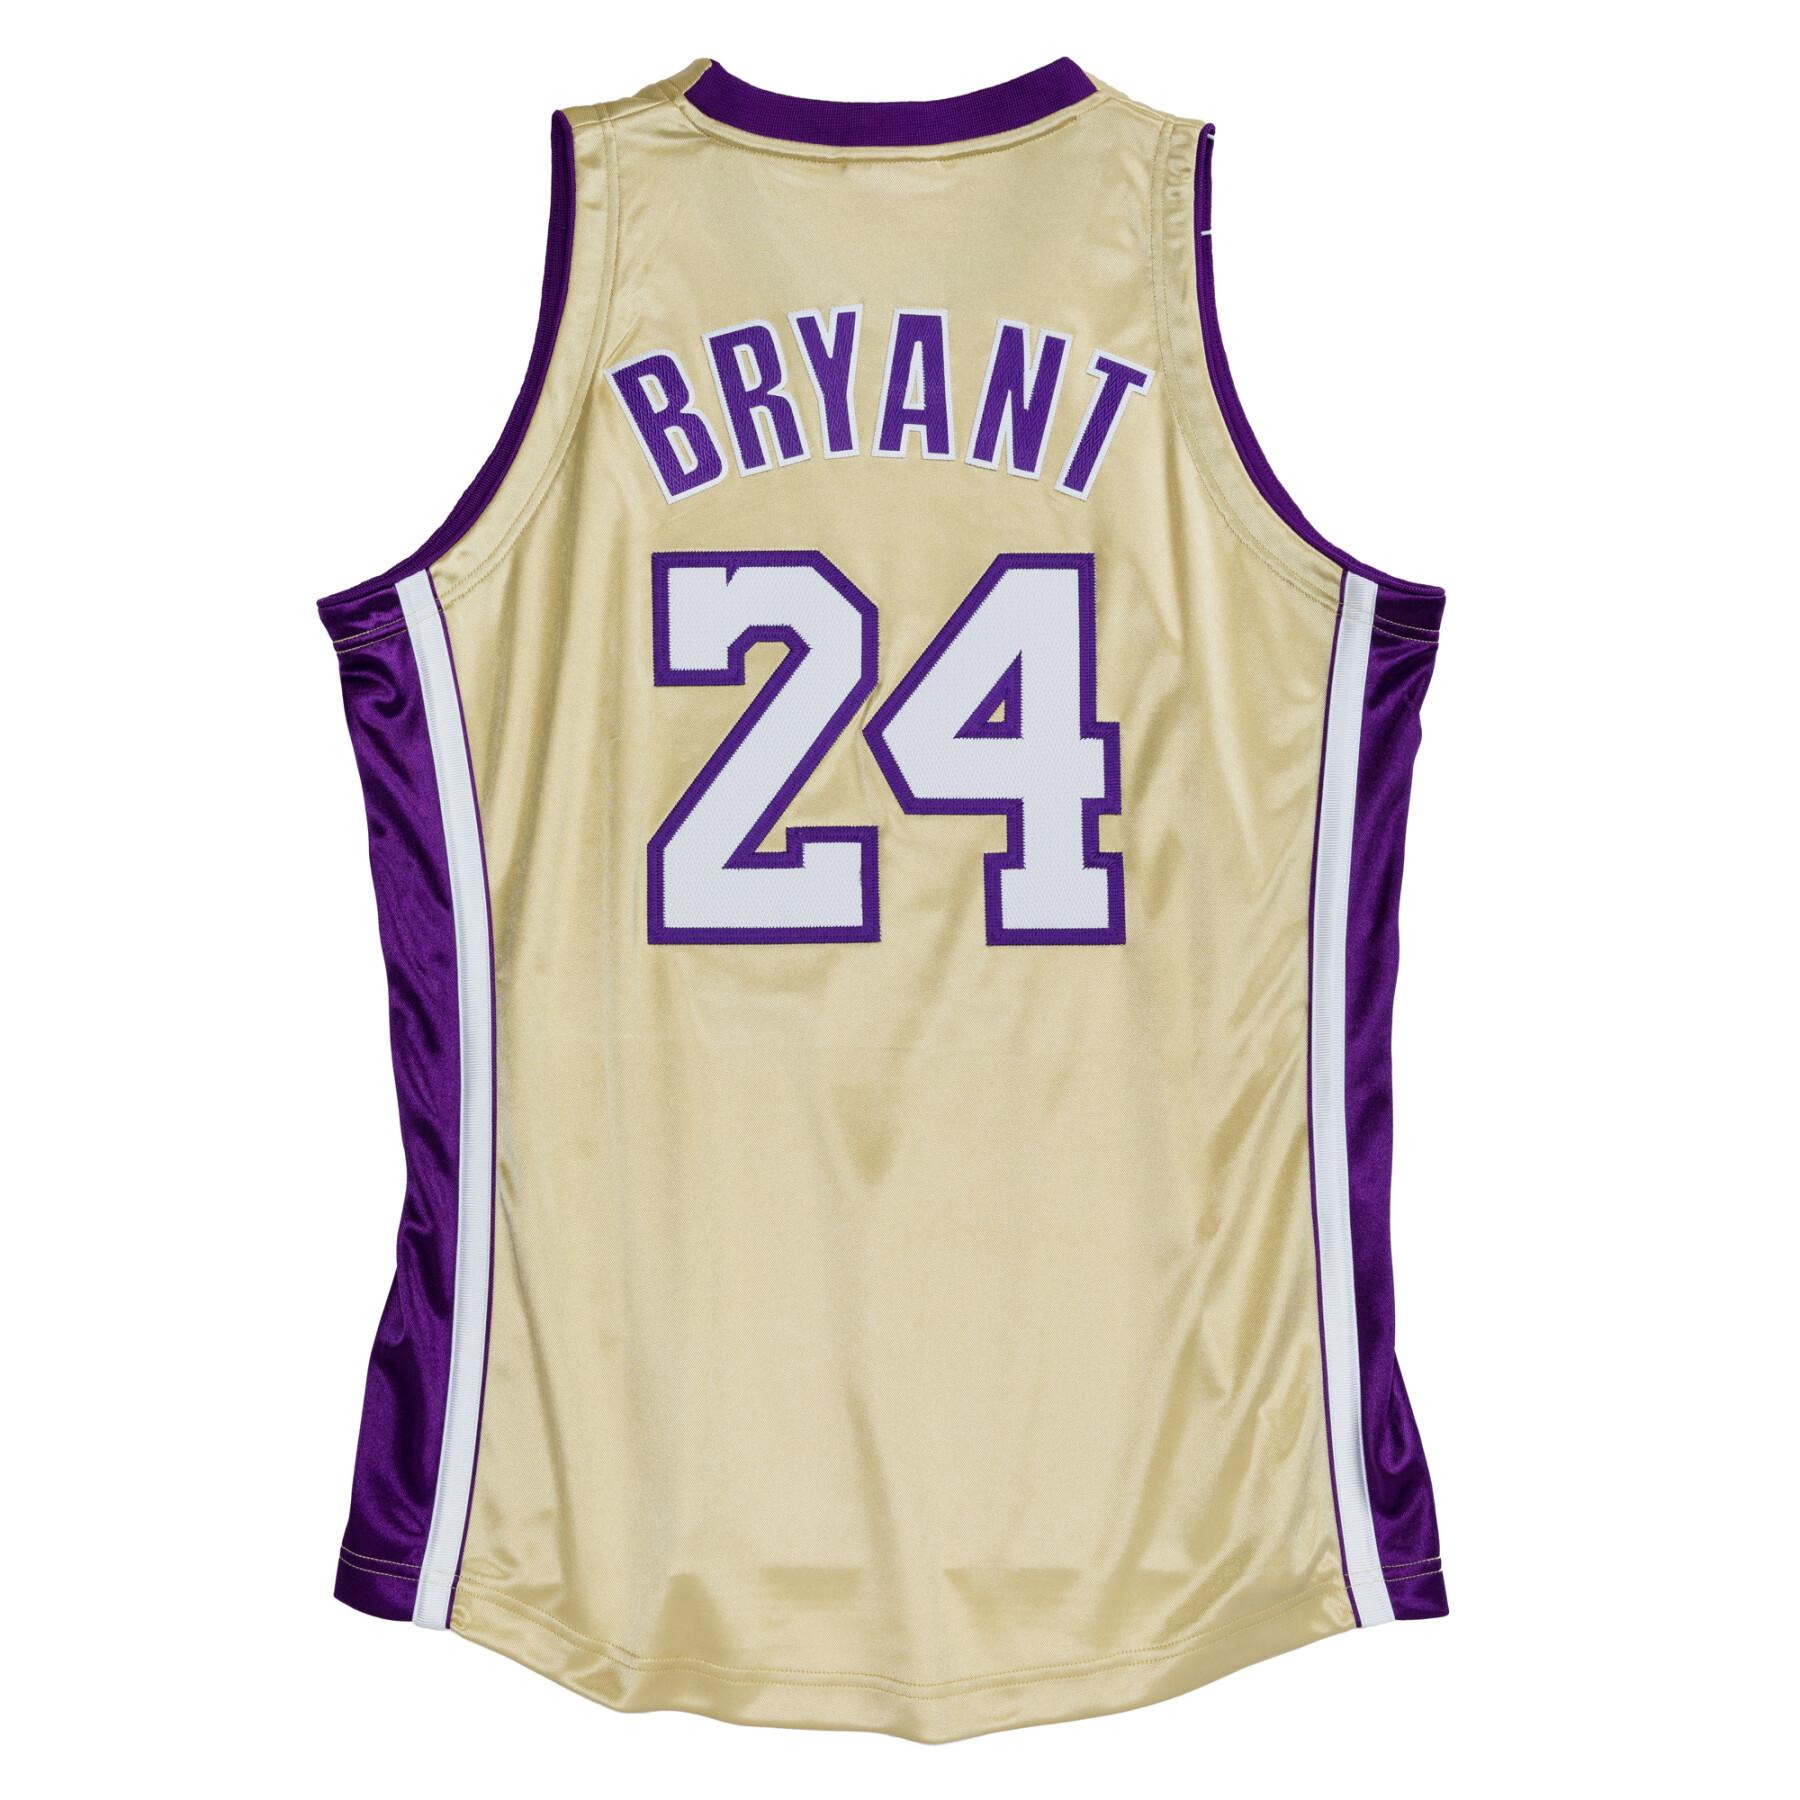 Trikot Los Angeles Lakers NBA Authentic 96 Kobe Bryant